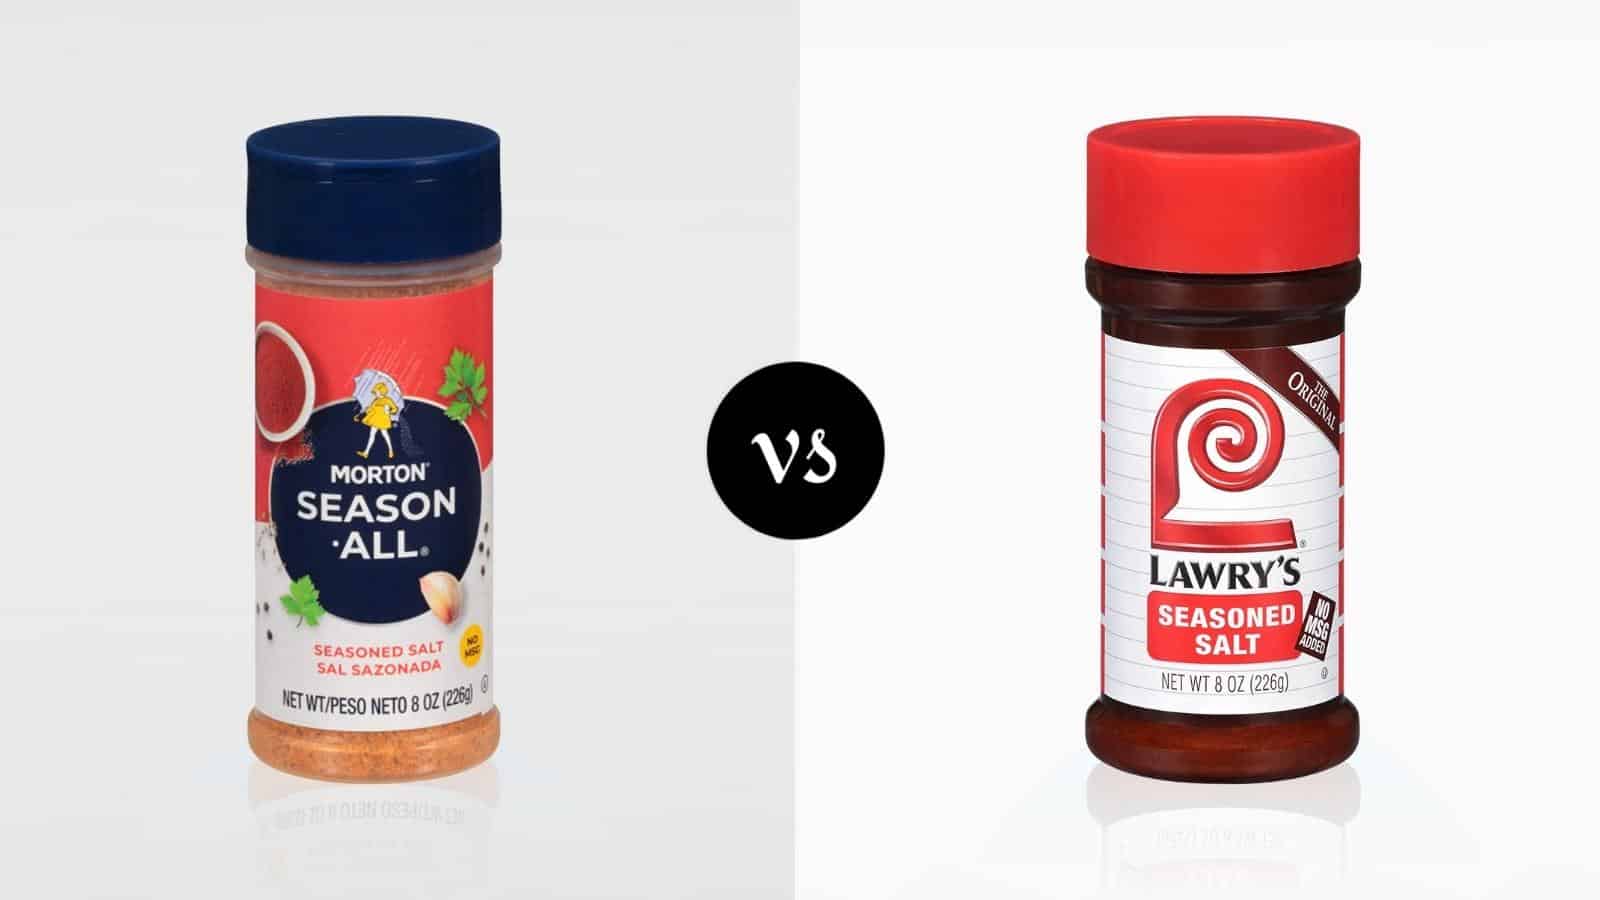 Season All vs Lawry's Seasoned Salt